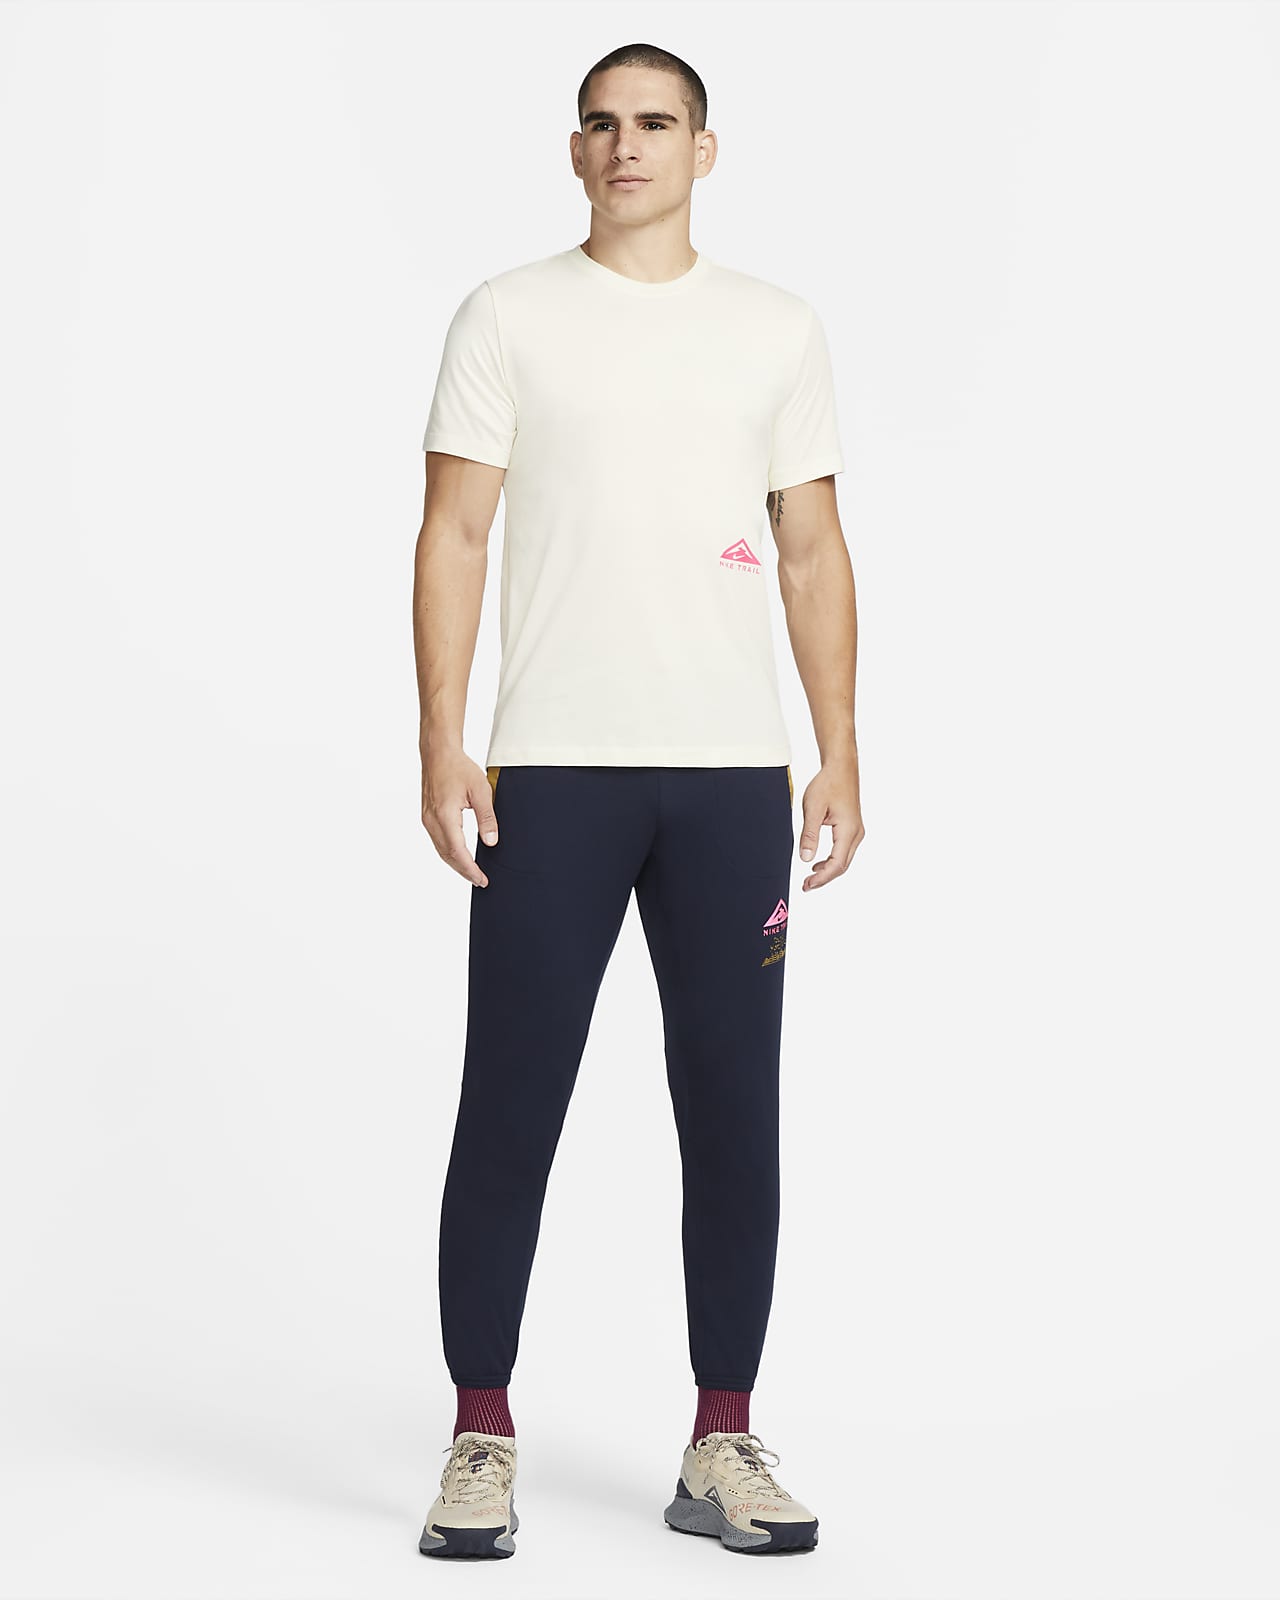 Nike Running - Trail - Débardeur à logo - Gris